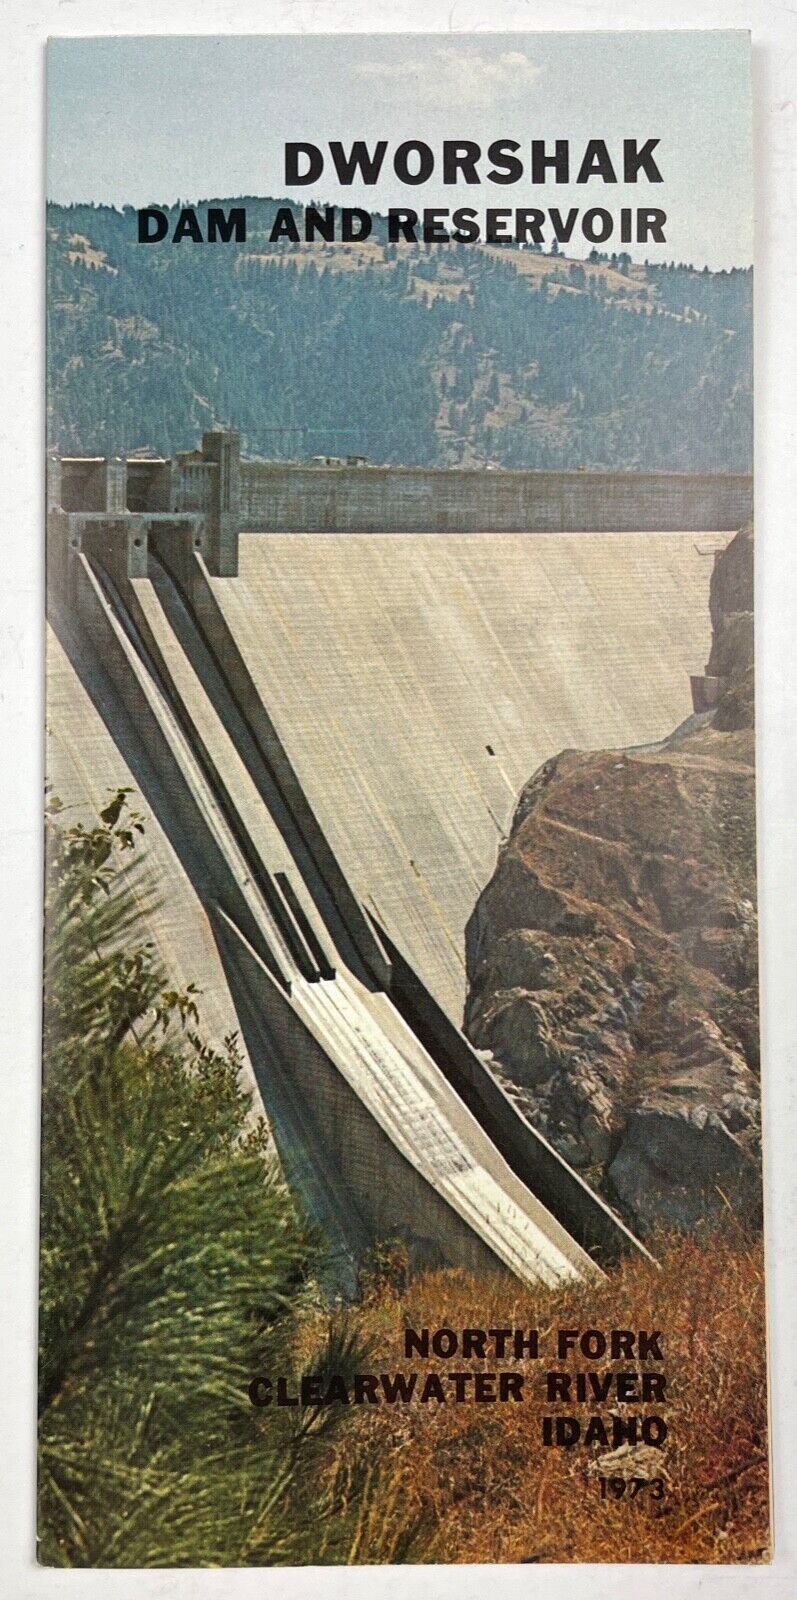 Dworshak Dam & Reservoir North Fork Clearwater River Idaho Travel Brochure 1973